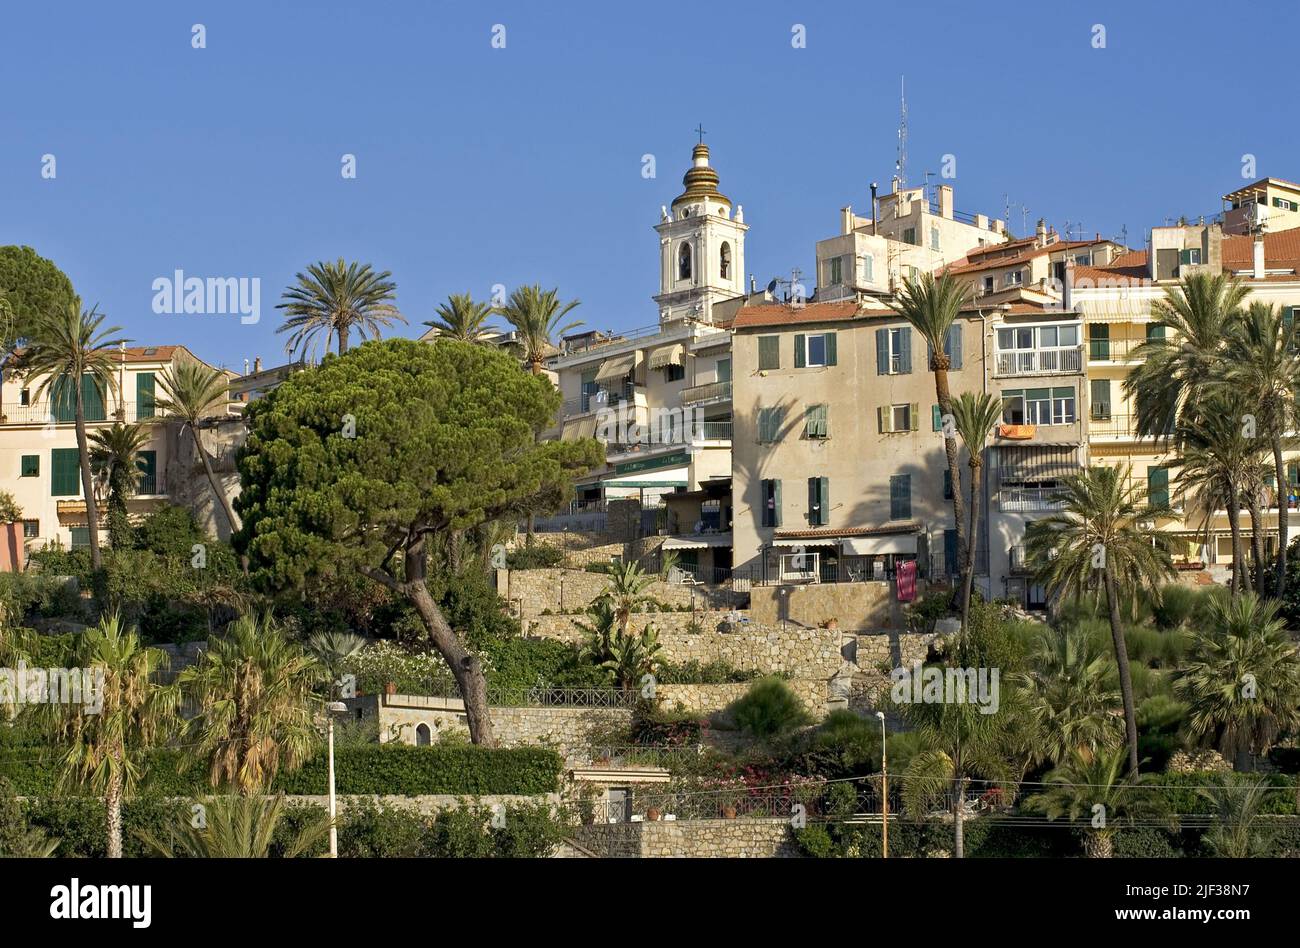 view of the old city, Italy, Liguria, Bordighera Stock Photo